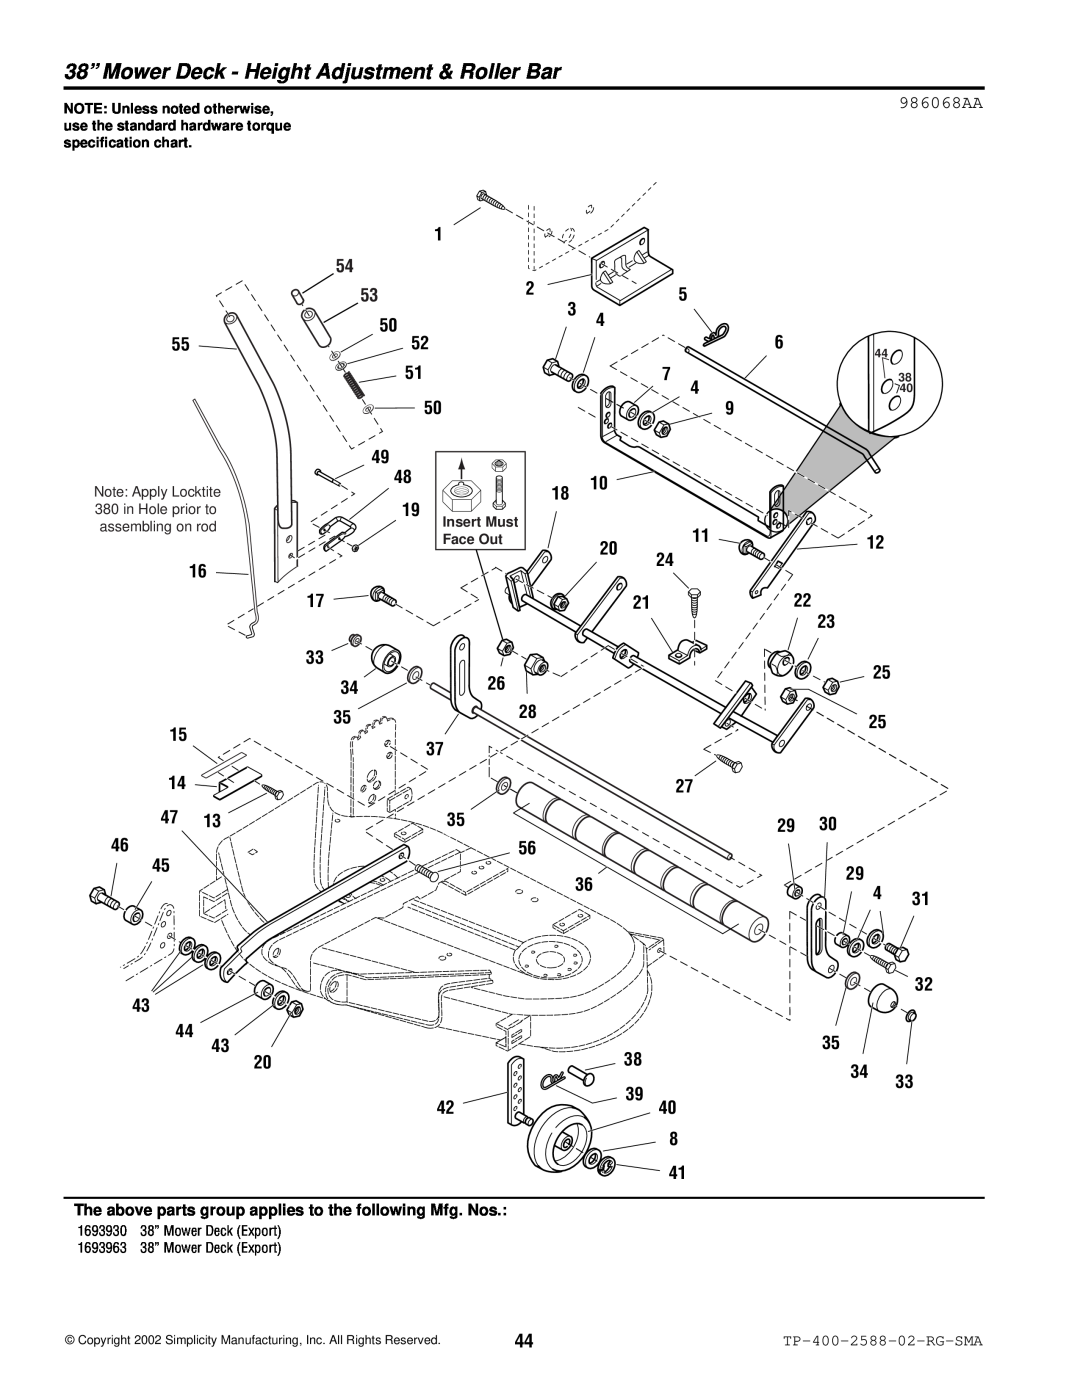 Simplicity 500 Series manual 38” Mower Deck - Height Adjustment & Roller Bar, 986068AA, TP-400-2588-02-RG-SMA, Insert Must 